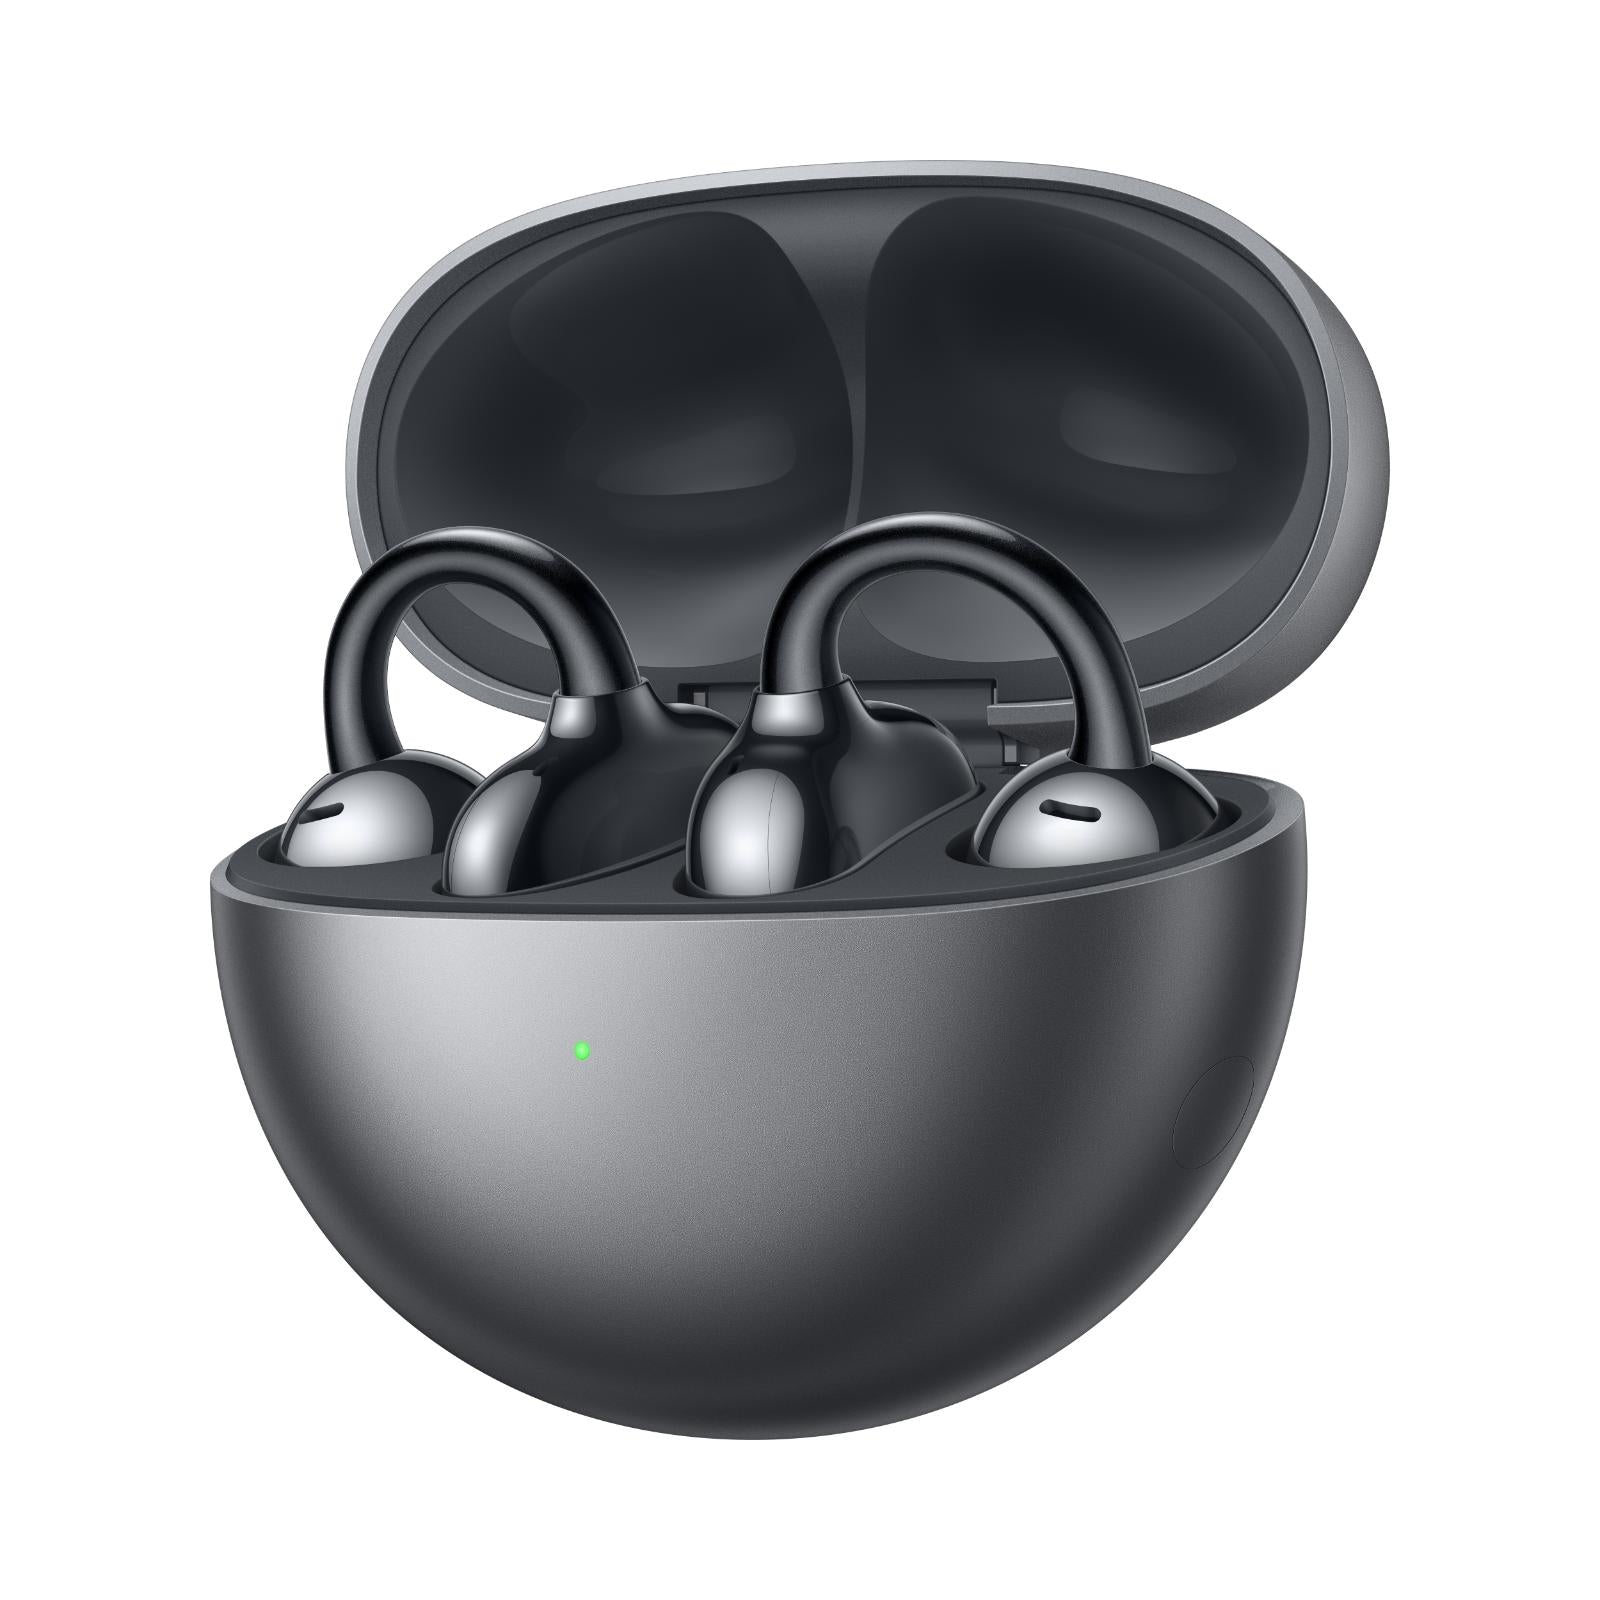 Huawei FreeClip Open-Ear Bluetooth Earbuds